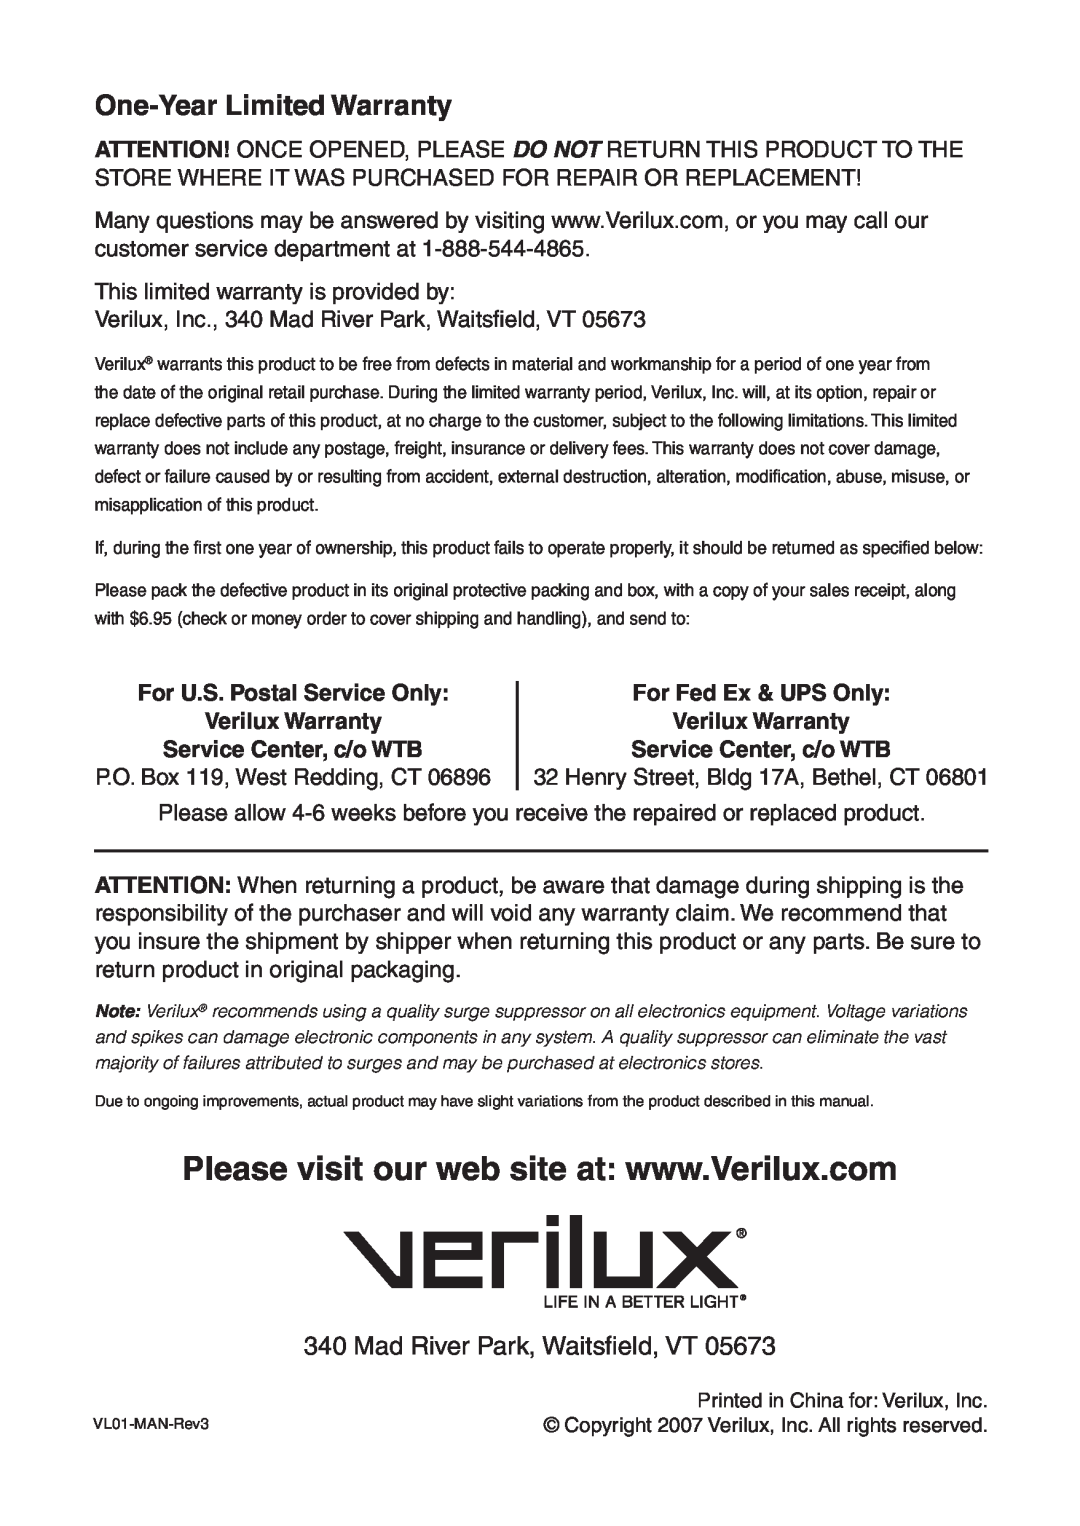 Verilux VL01 manual One-YearLimited Warranty, Mad River Park, Waitsﬁeld, VT, For U.S. Postal Service Only Verilux Warranty 